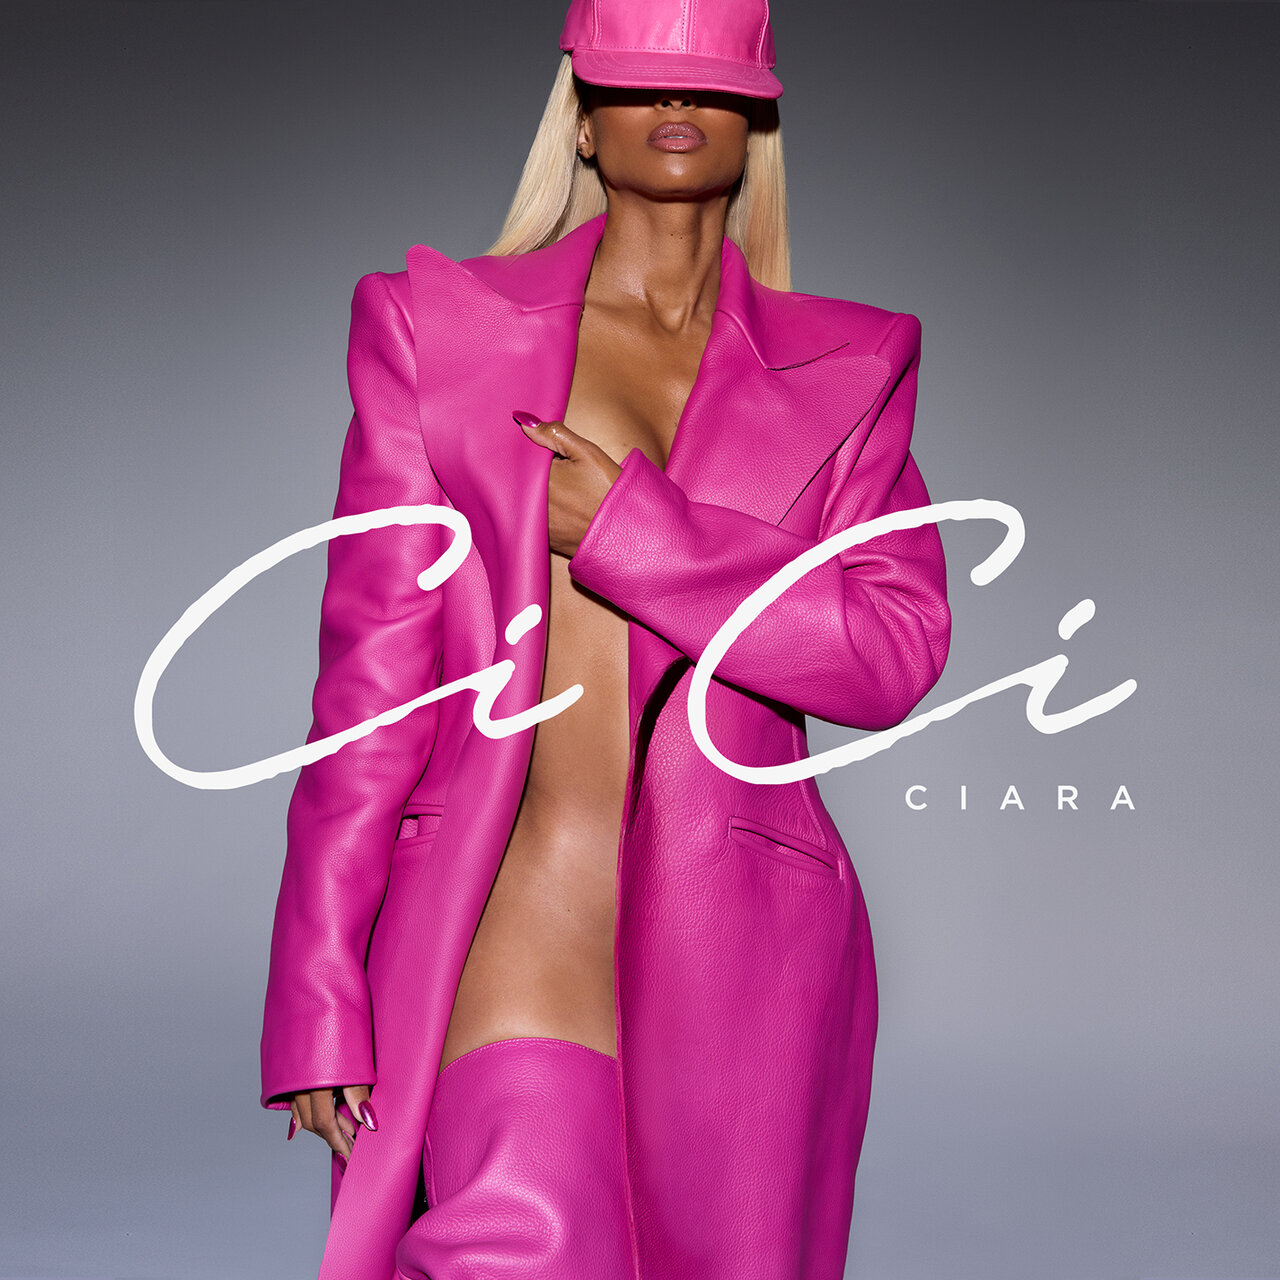 Ciara - CiCi (Cover)